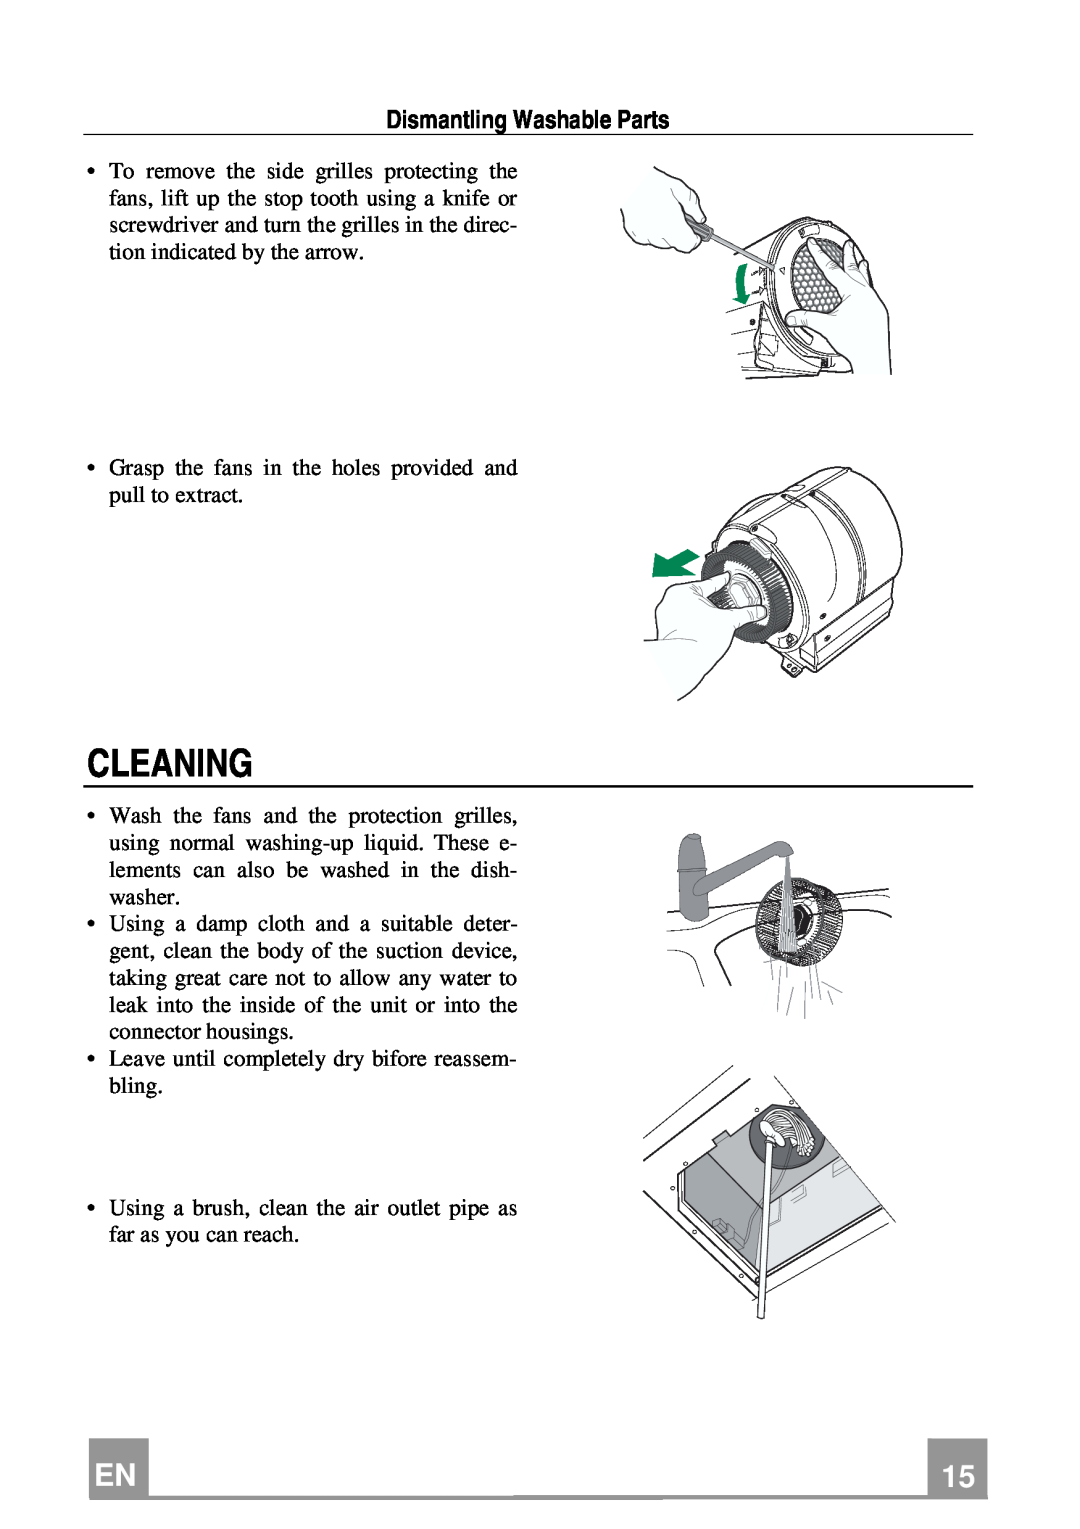 Franke Consumer Products FGL 9104 XS ECS, FGL 6104 XS ECS manual Cleaning, Dismantling Washable Parts 